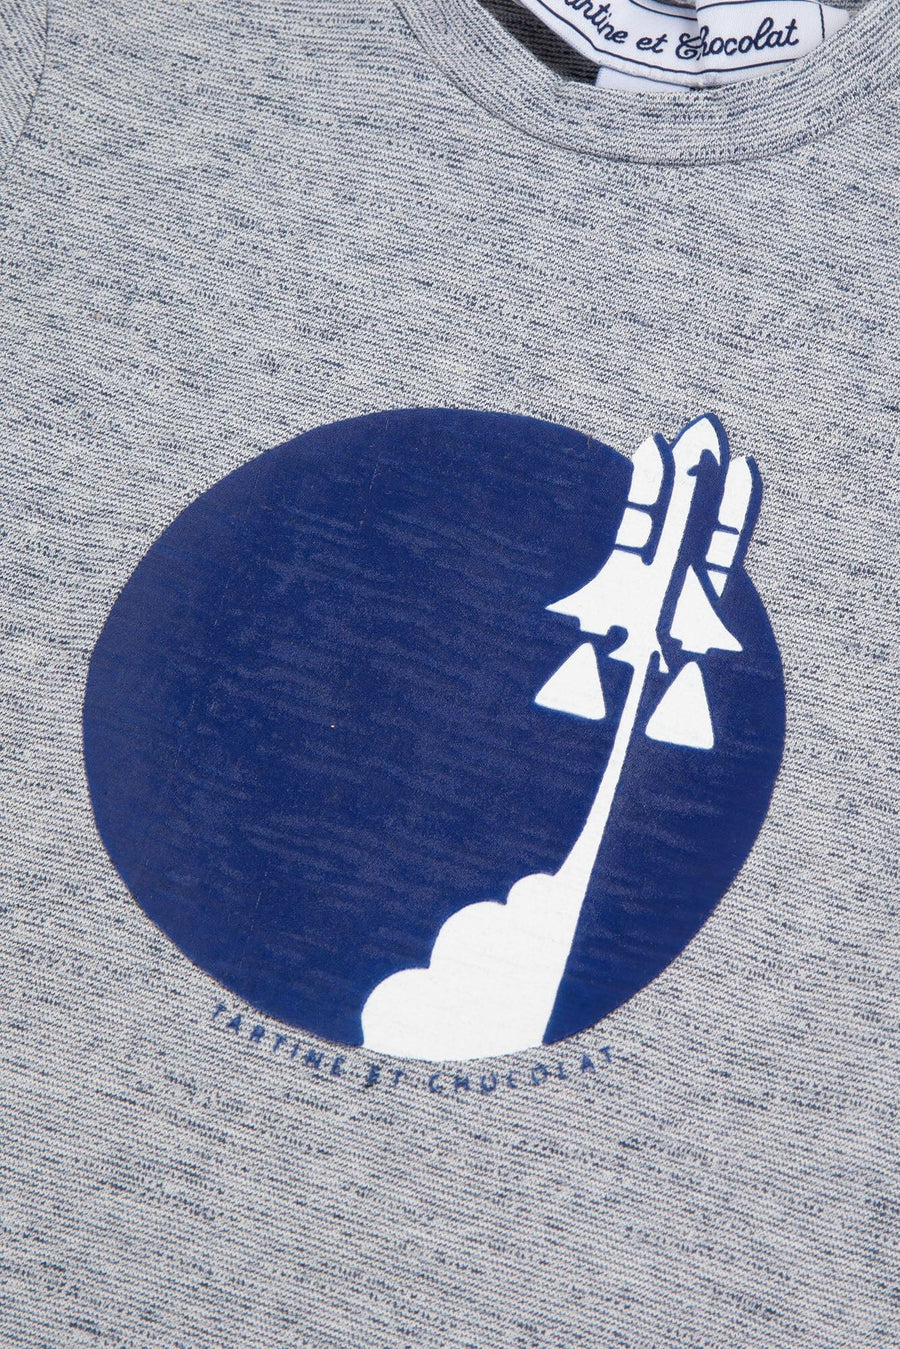 Tartine et Chocolat® T-Shirt Bleu illustration astronaute Hosszú ujjú-2